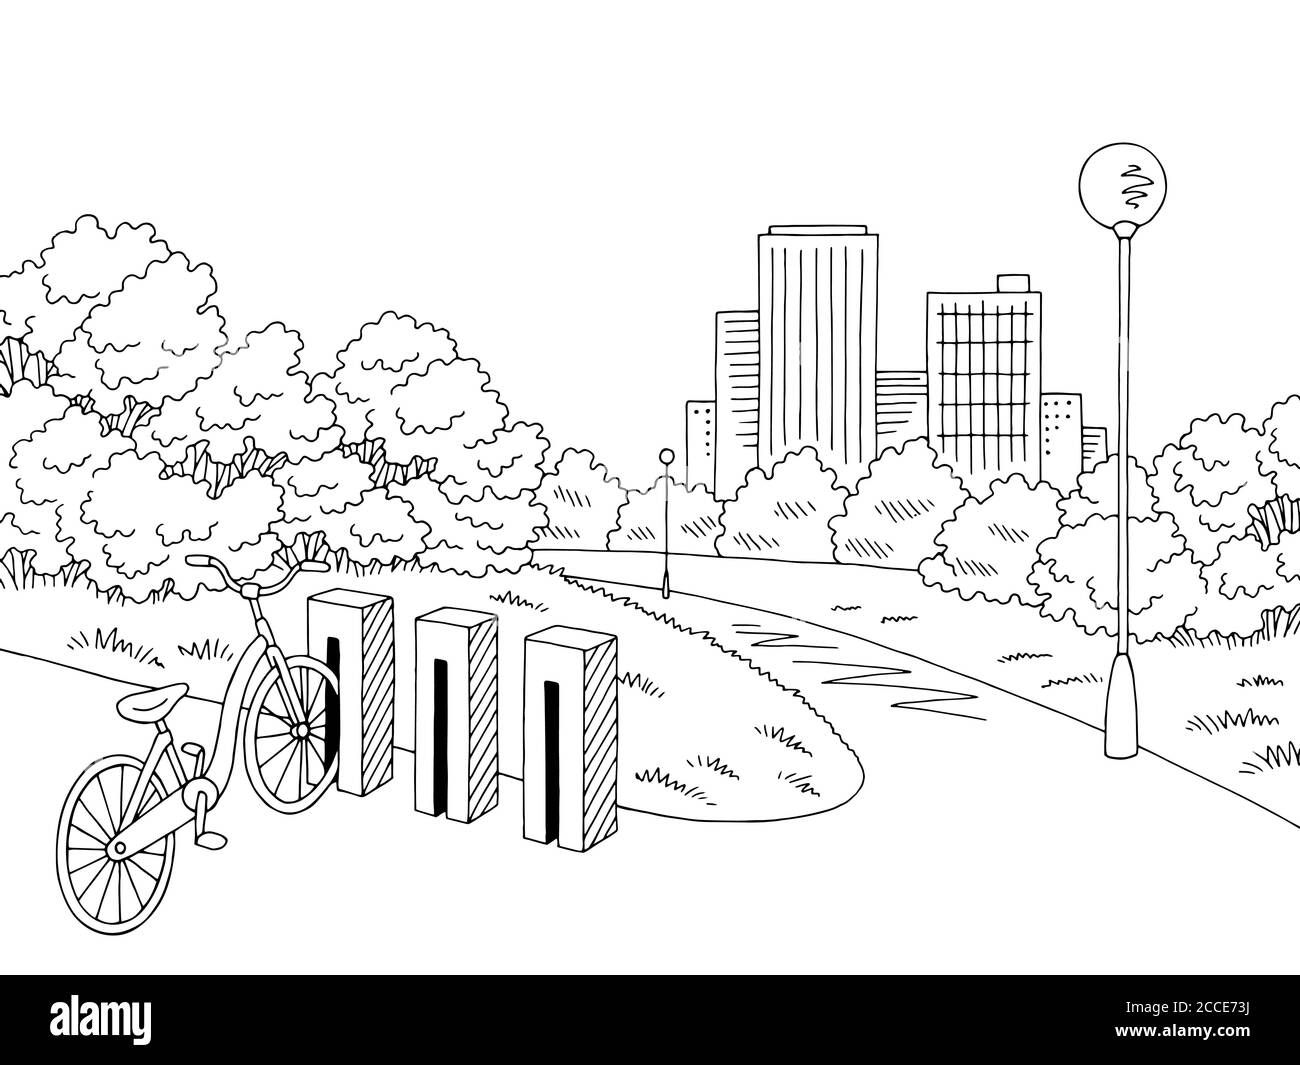 Bike rental parking park graphic black white city landscape sketch illustration vector Stock Vector